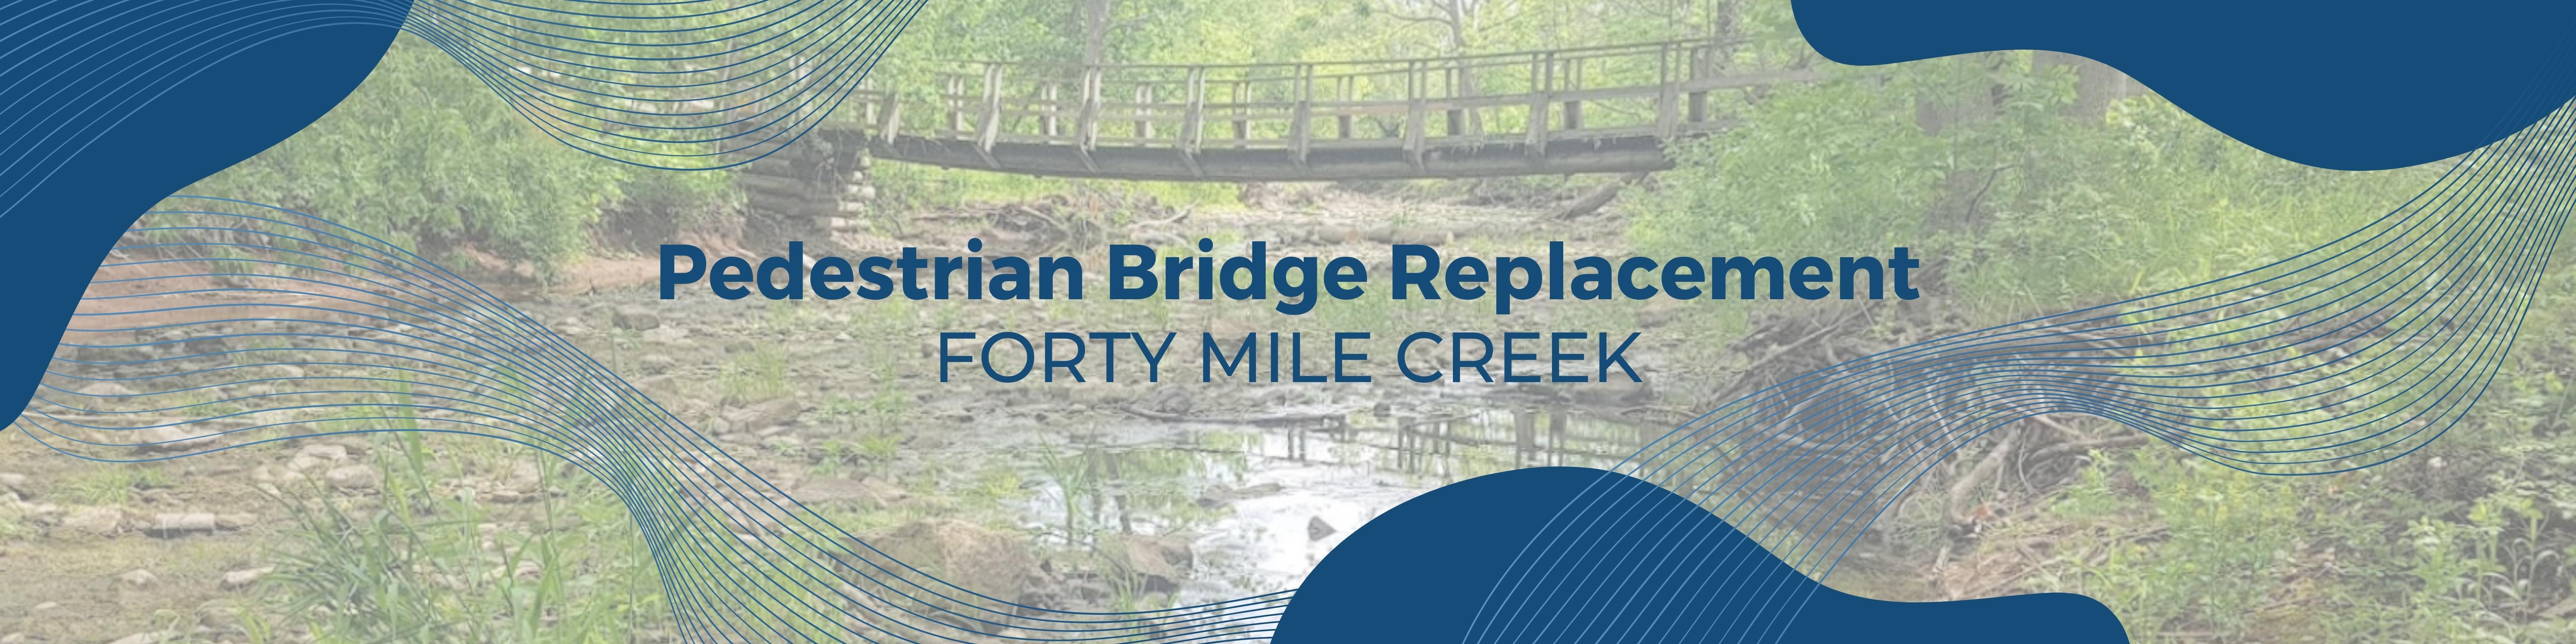 Forty Mile Creek Pedestrian Bridge Replacement